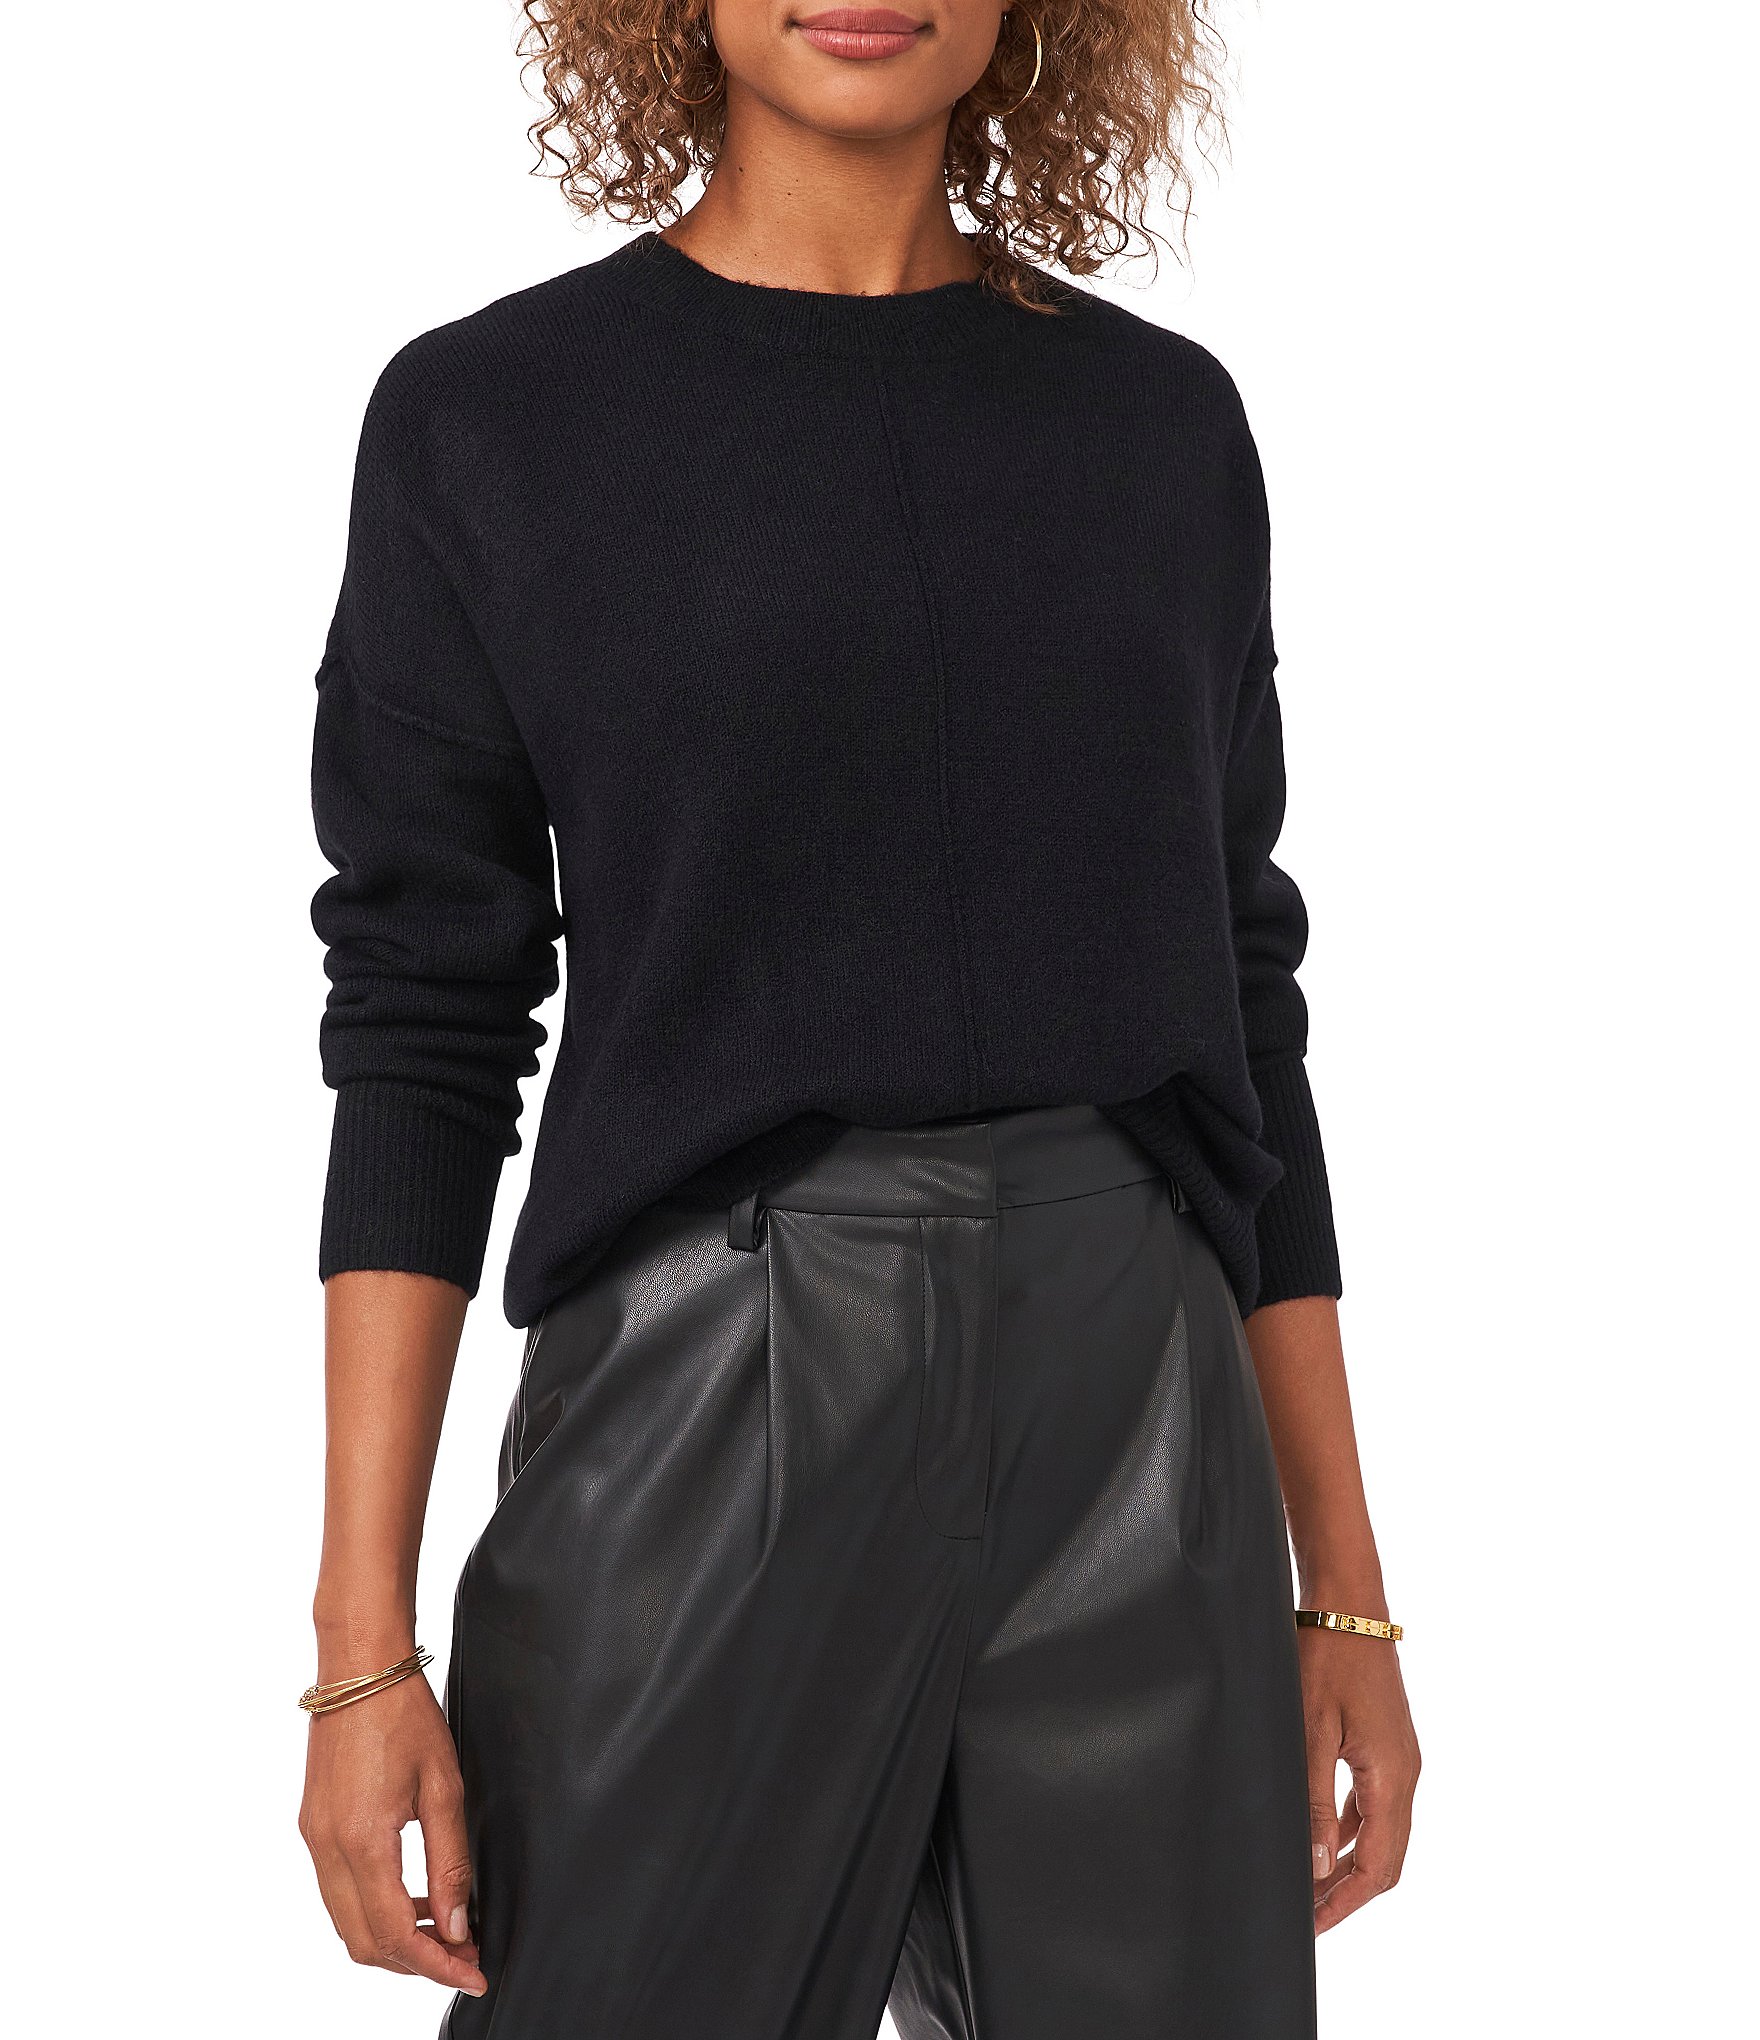 Black Women's Tops & Dressy Tops | Dillard's